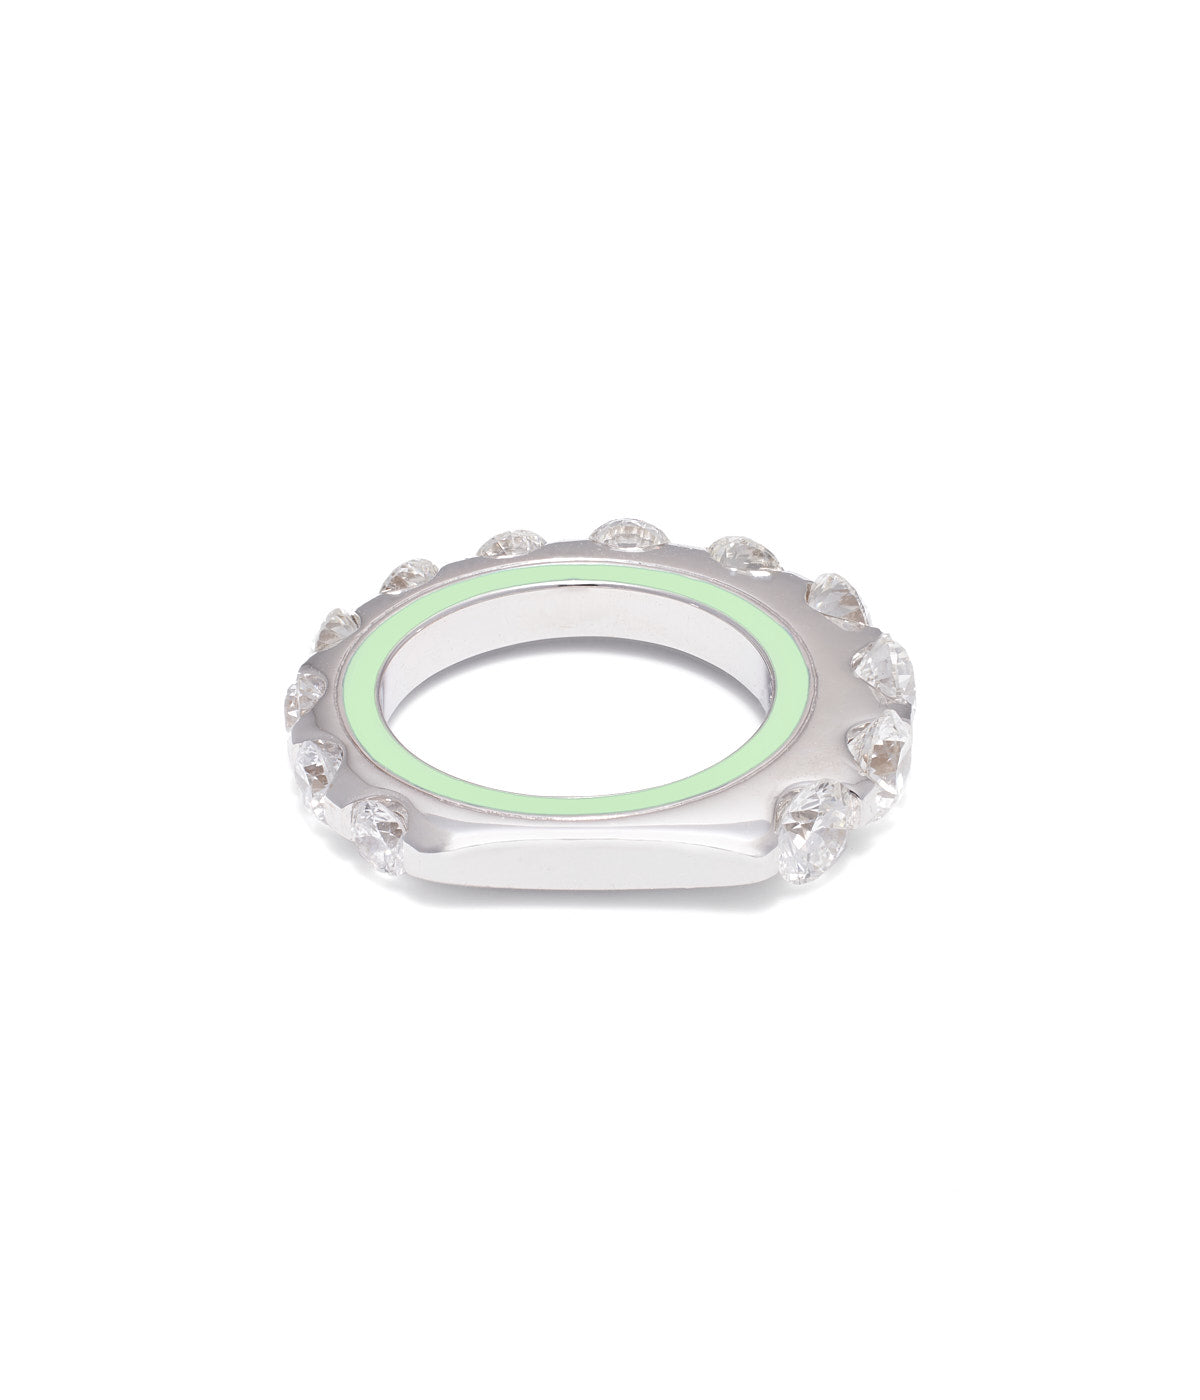 The Brilliant Round Enamel 18K White Gold Pinky Ring